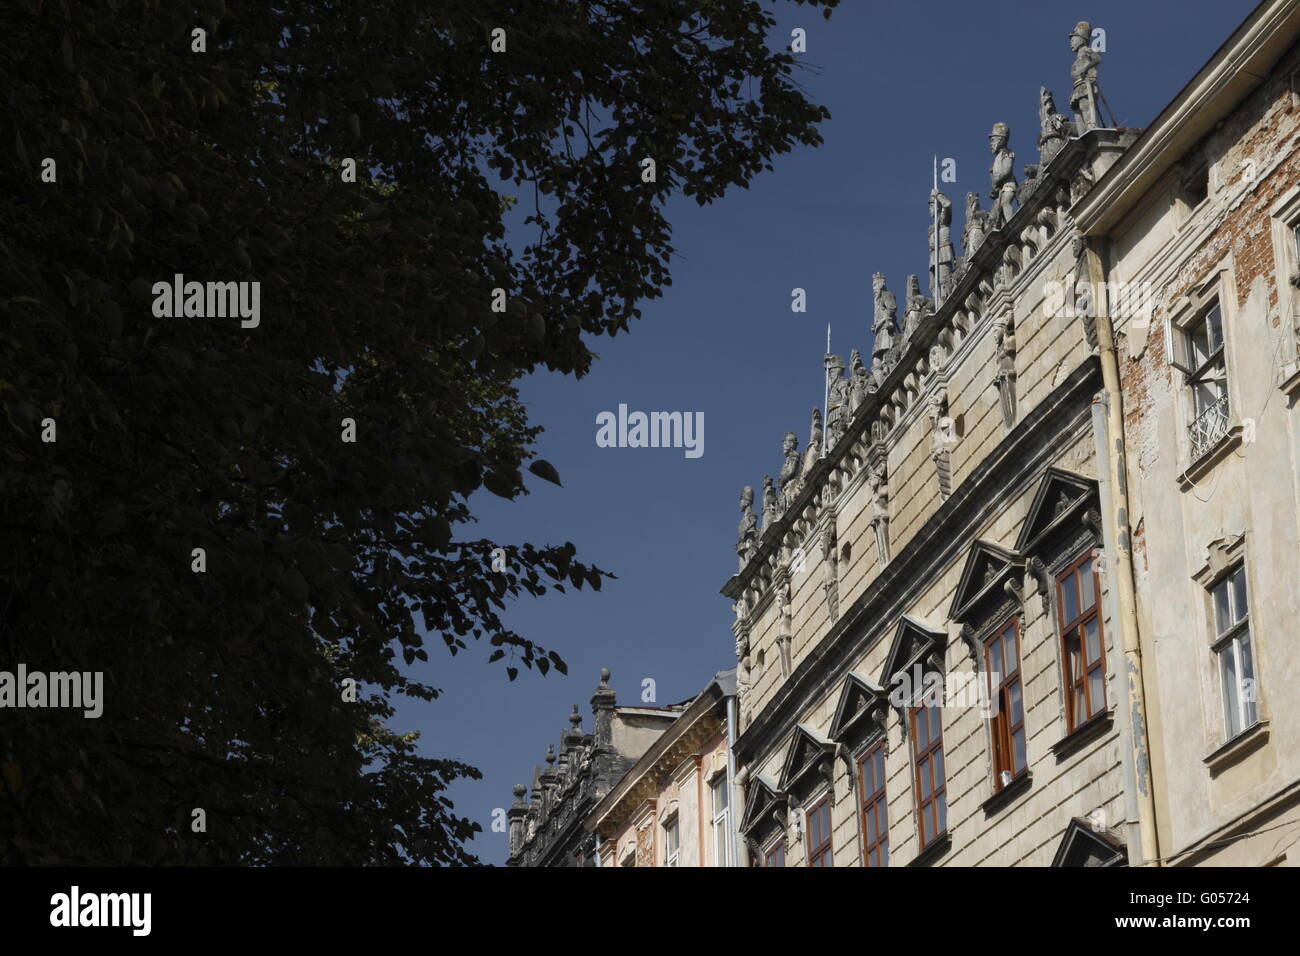 Korniakt Palace (Kamienica Królewska / Пала́ц Корня́кта) on the Market Square in the Old Town of Lviv (Lwów) Stock Photo